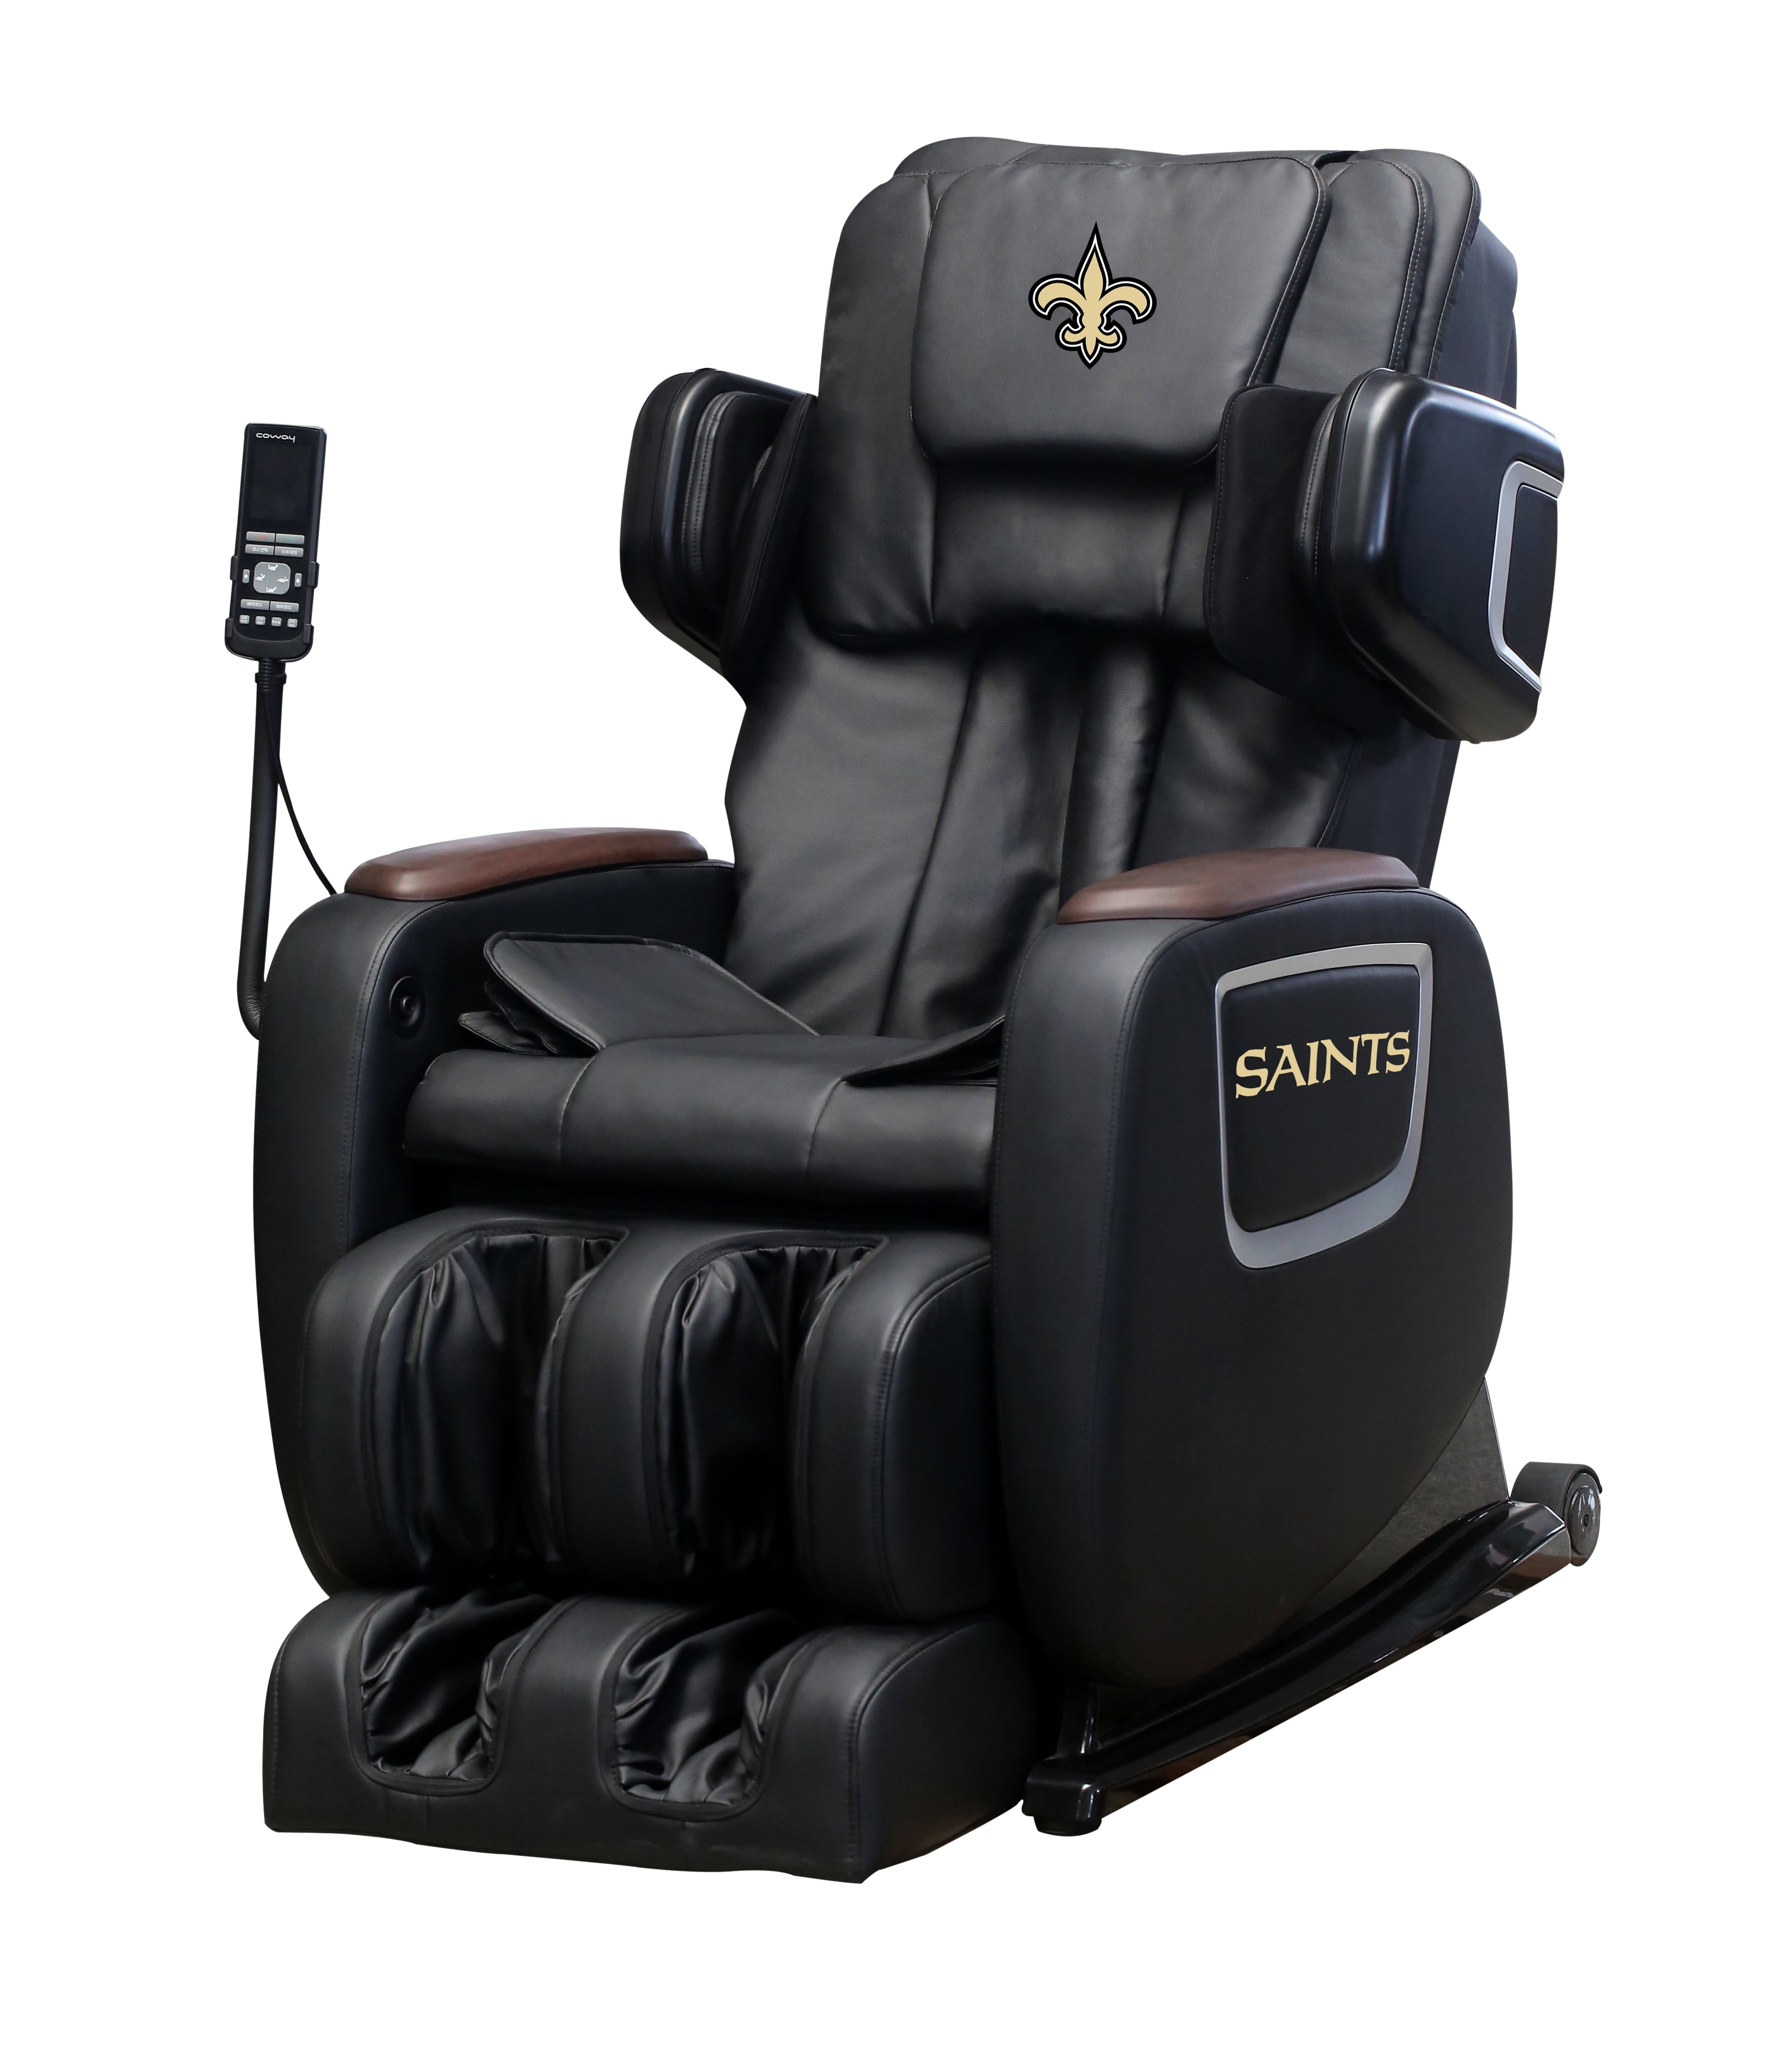 Bestmassage Zero Gravity Full Body Electric Shiatsu Massage Chair With Wireless Bluetooth